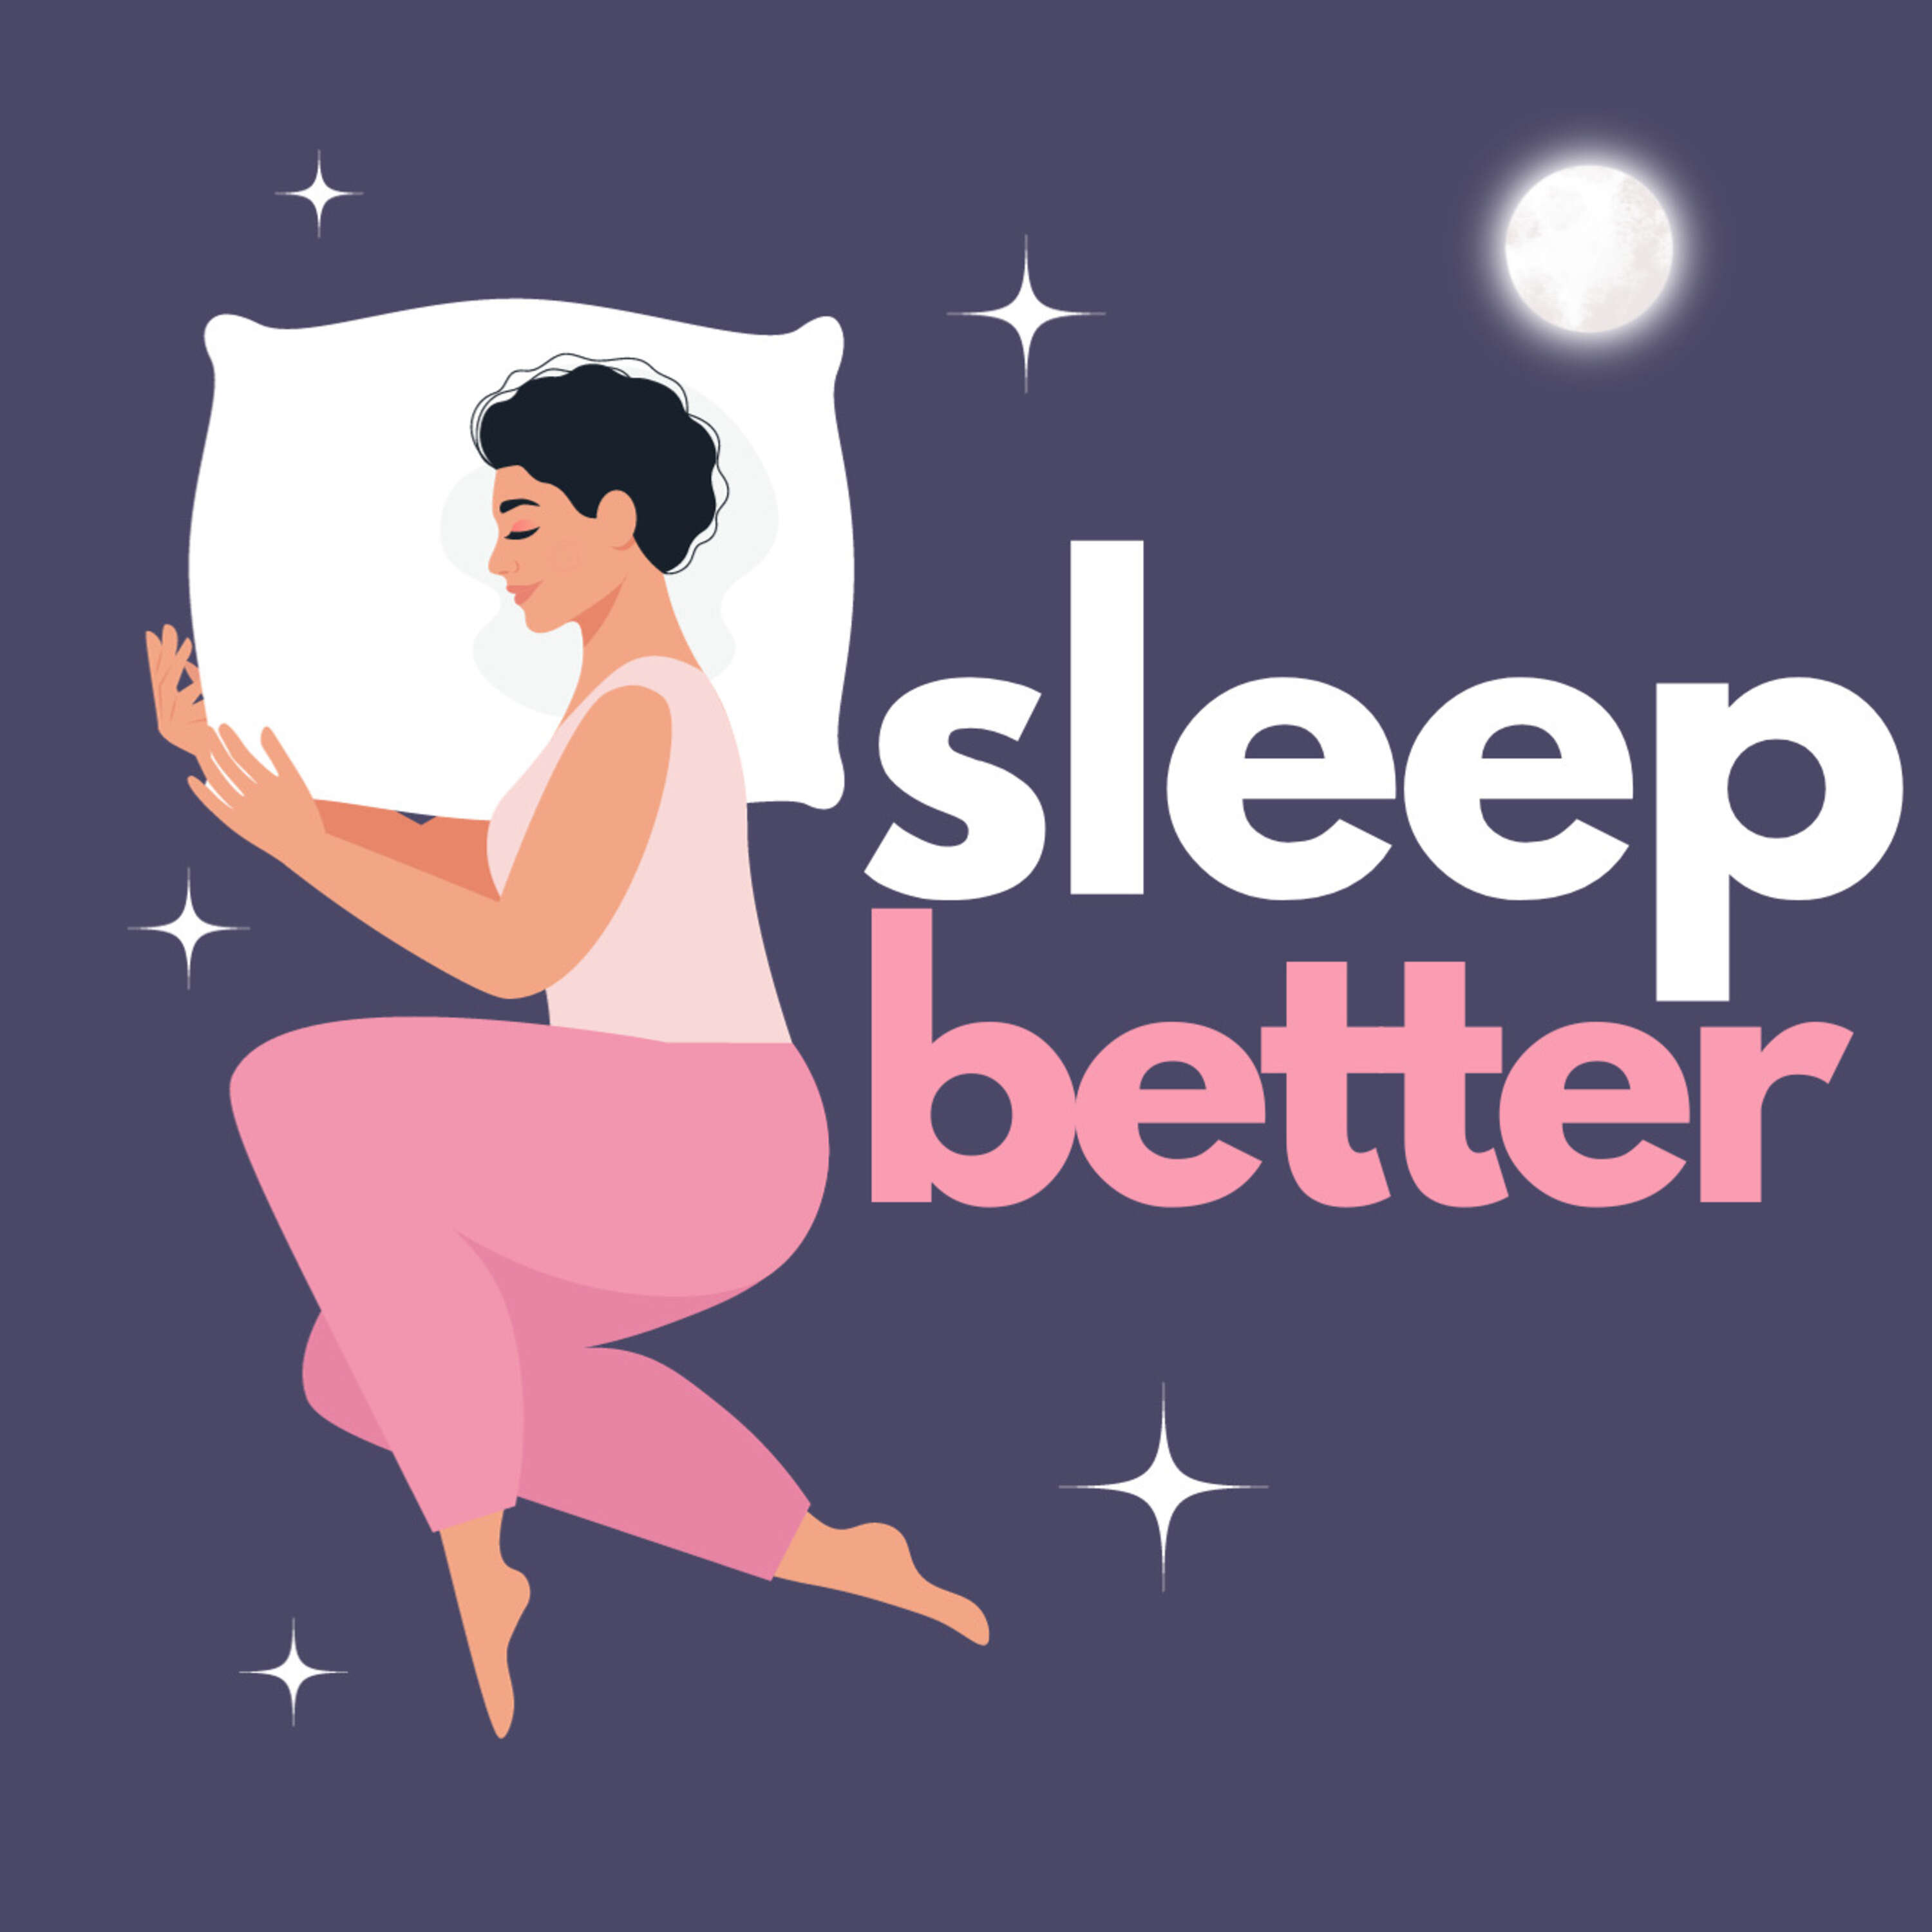 Sound Sleep: The Role of Music in Enhancing Sleep Quality